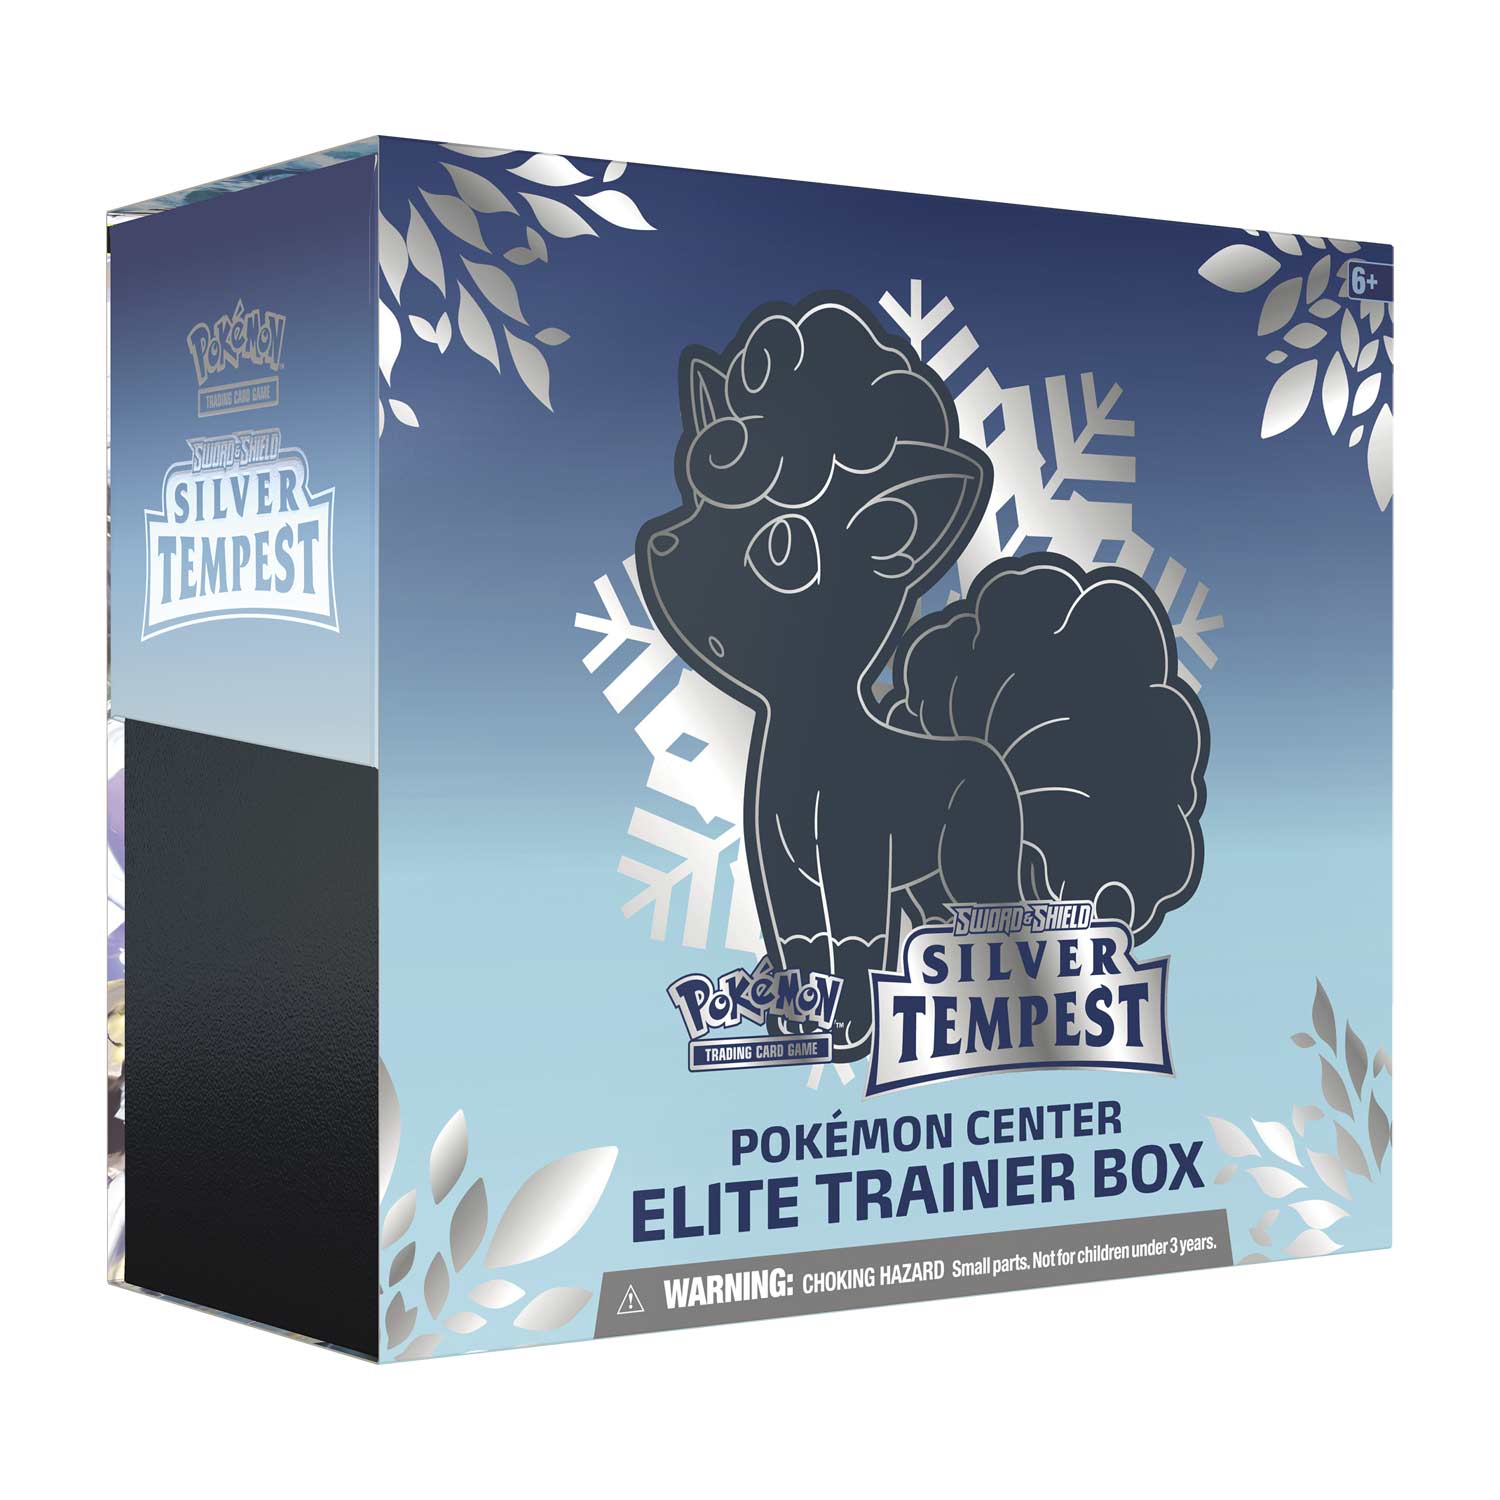 Silver Tempest Pokemon Center Elite Trainer Box, Radiant Alakazam, and  More Set Details! 